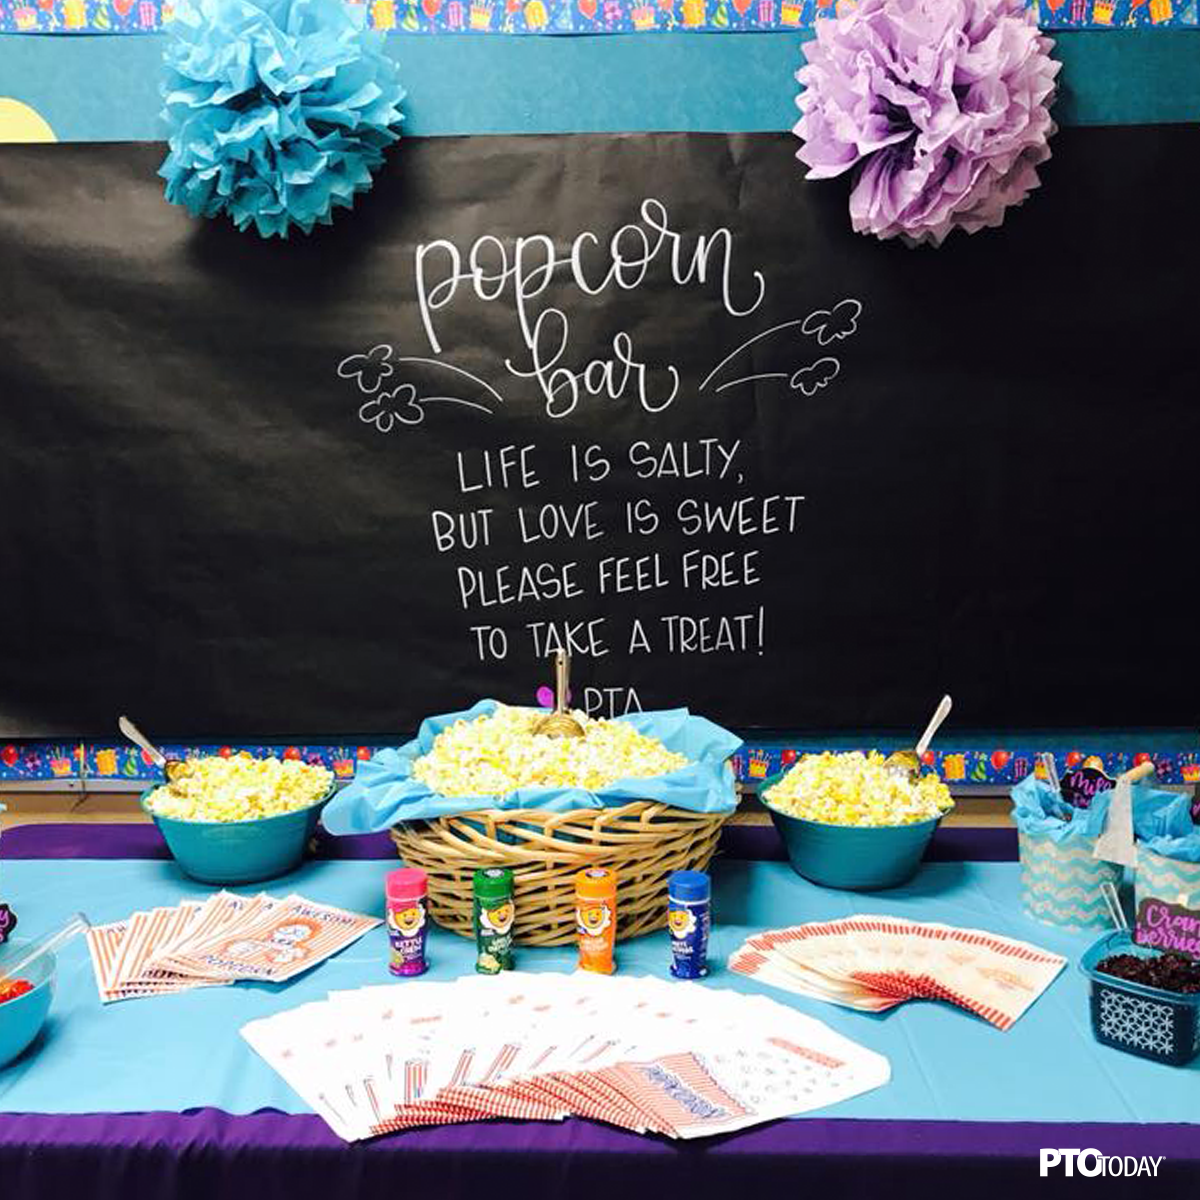 Enter to win a teacher appreciation popcorn bar!